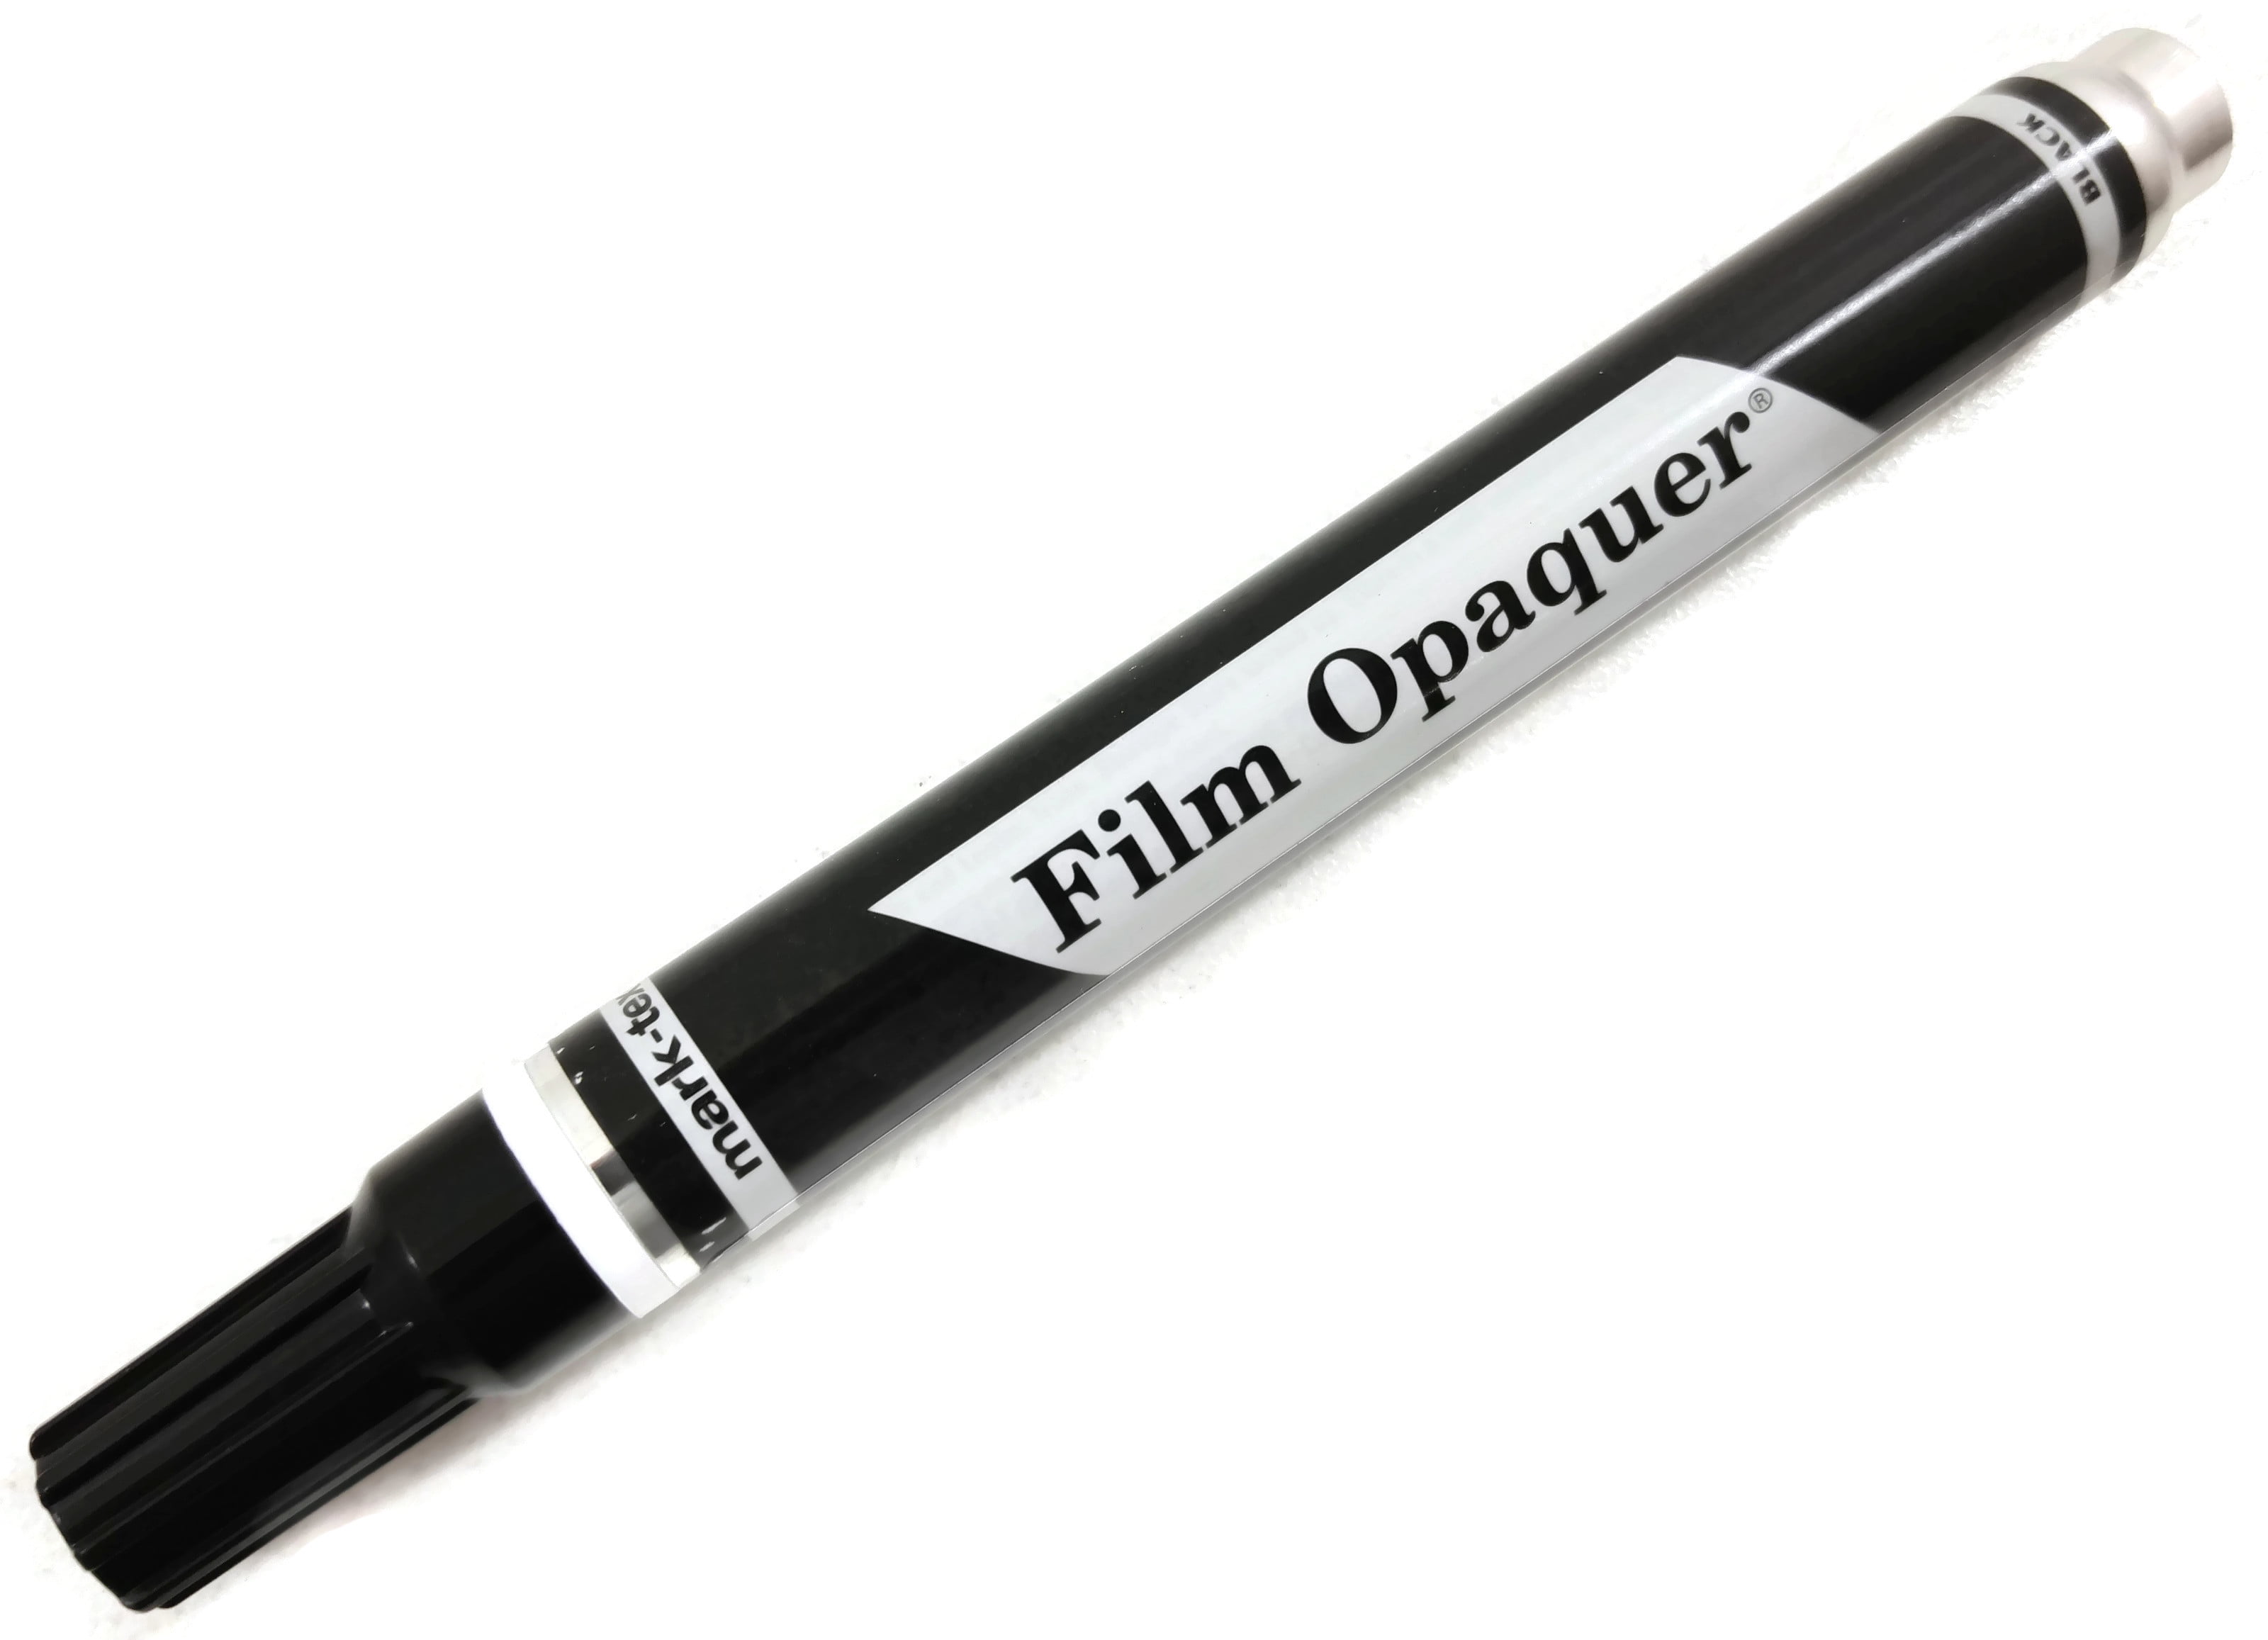  Extra Fine Point Writing Pens: 6 Black Ultra Thin